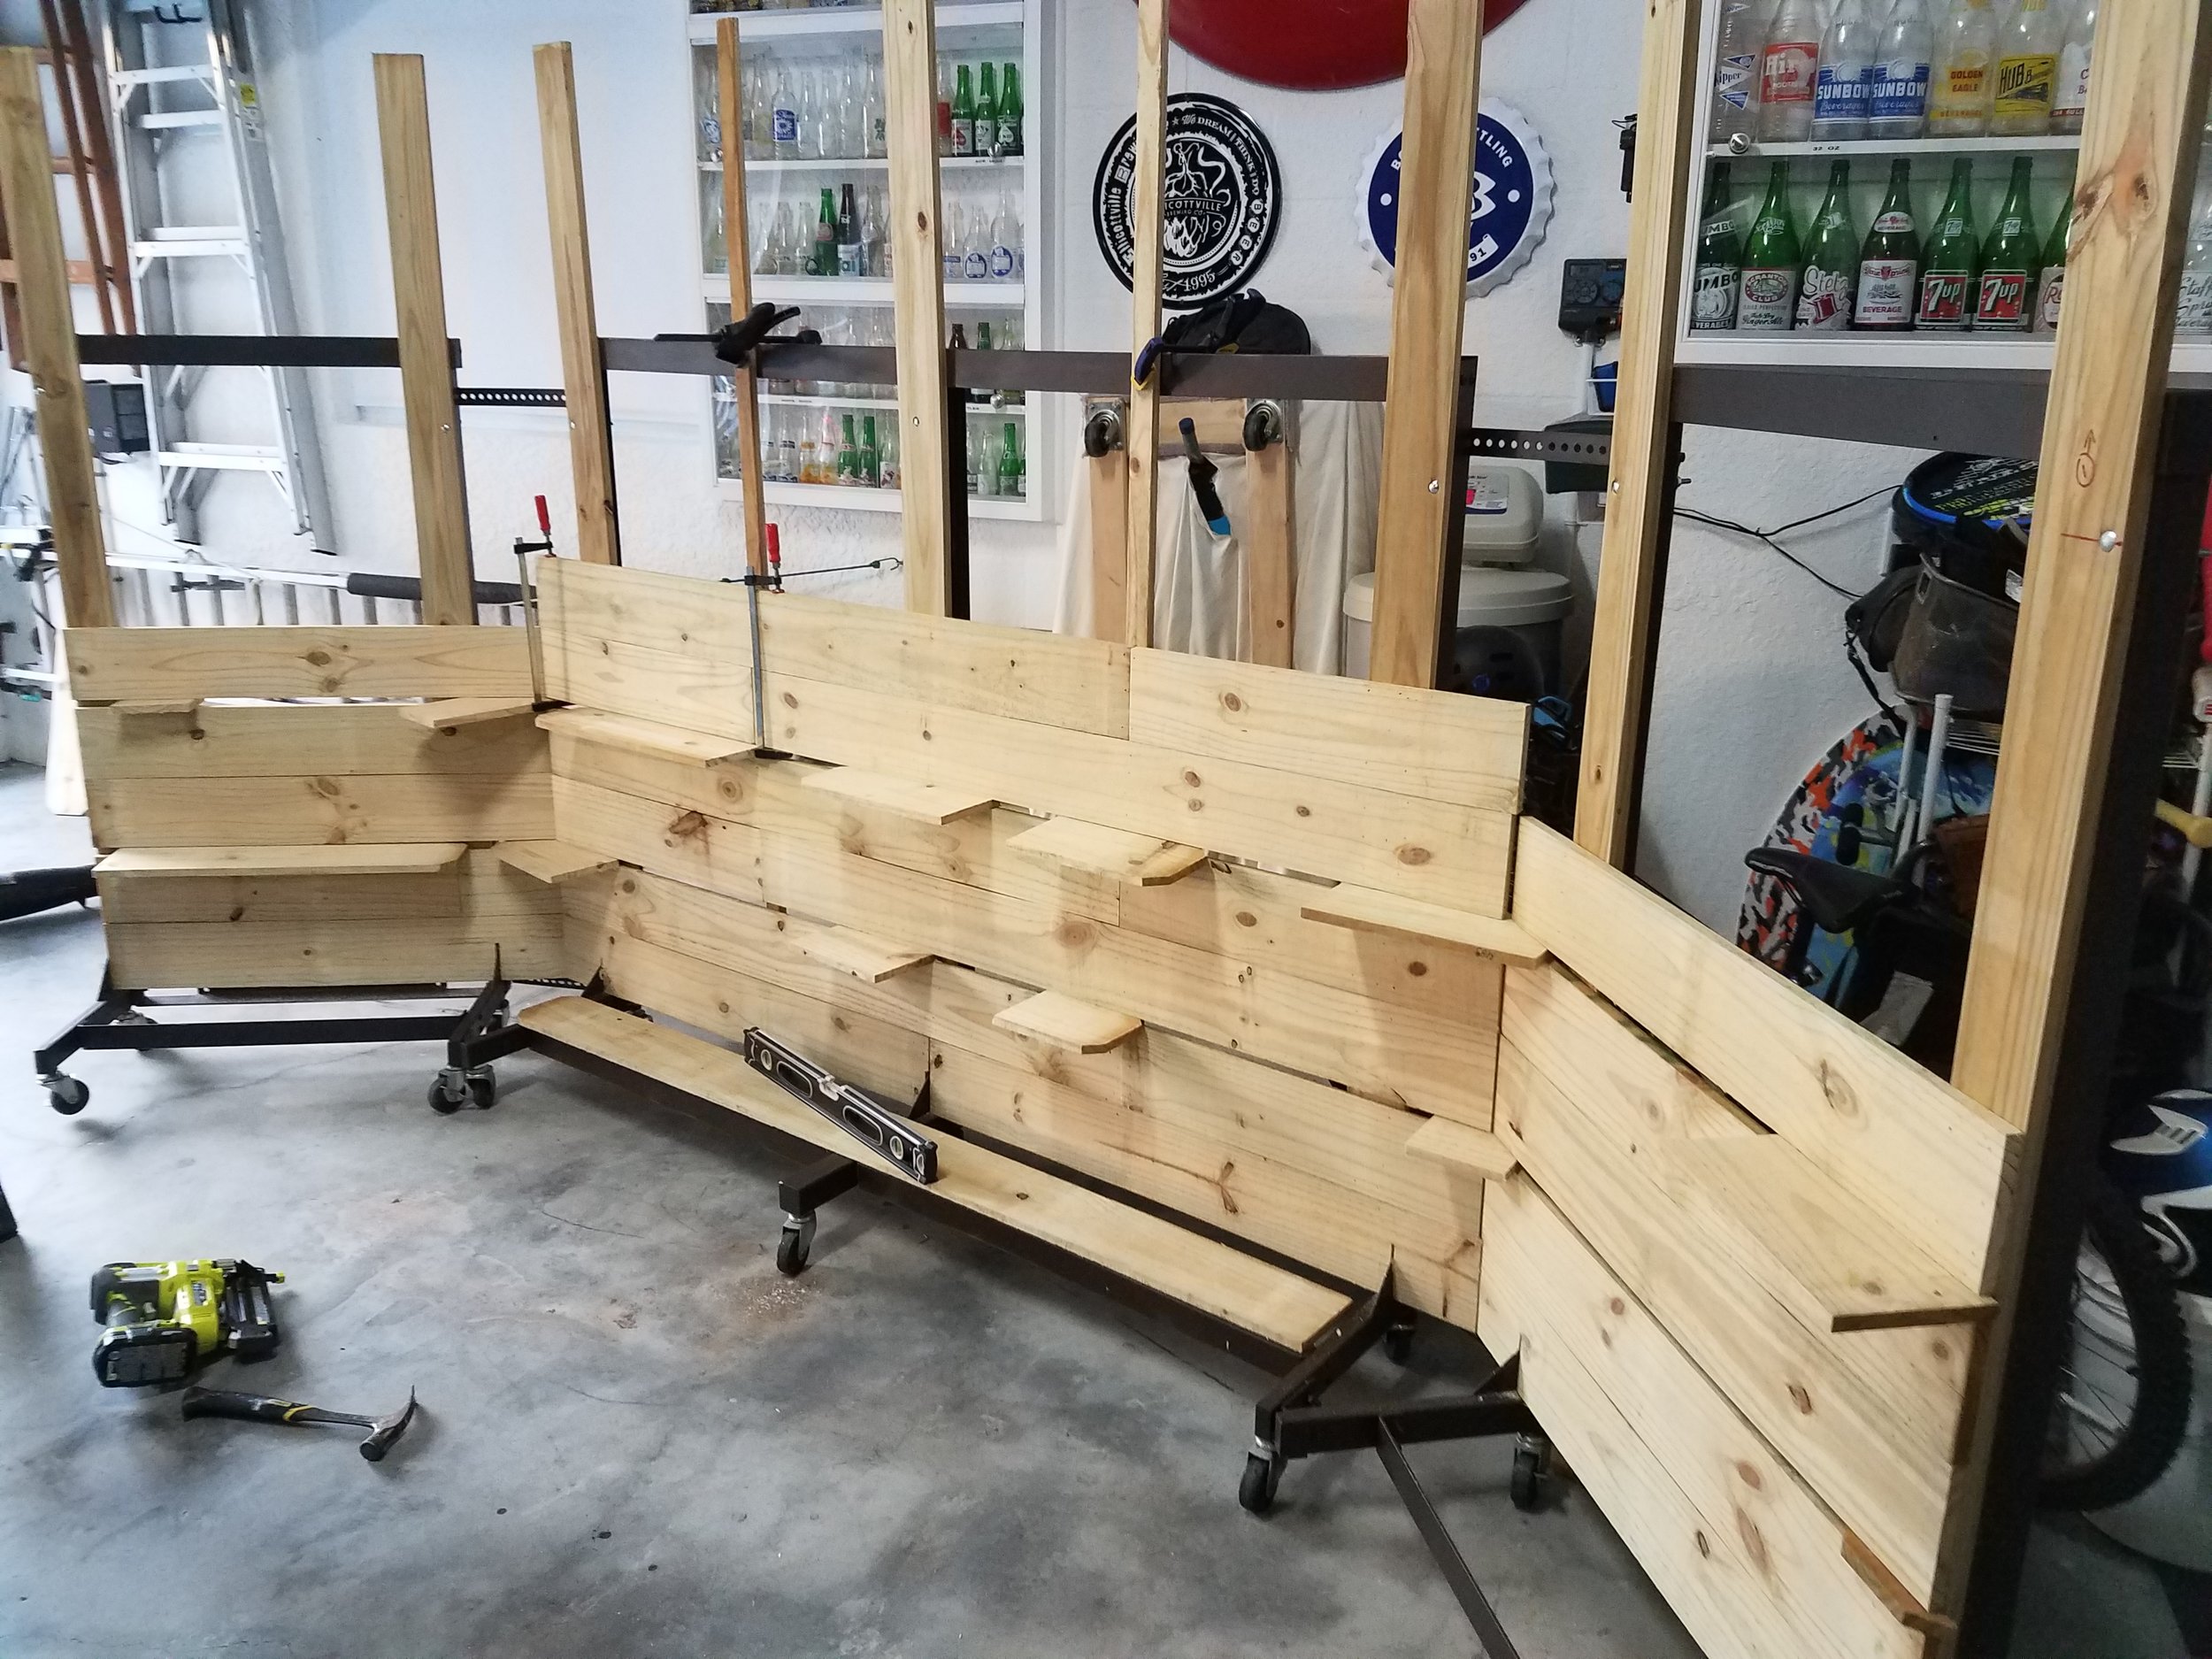 Start of adding wood